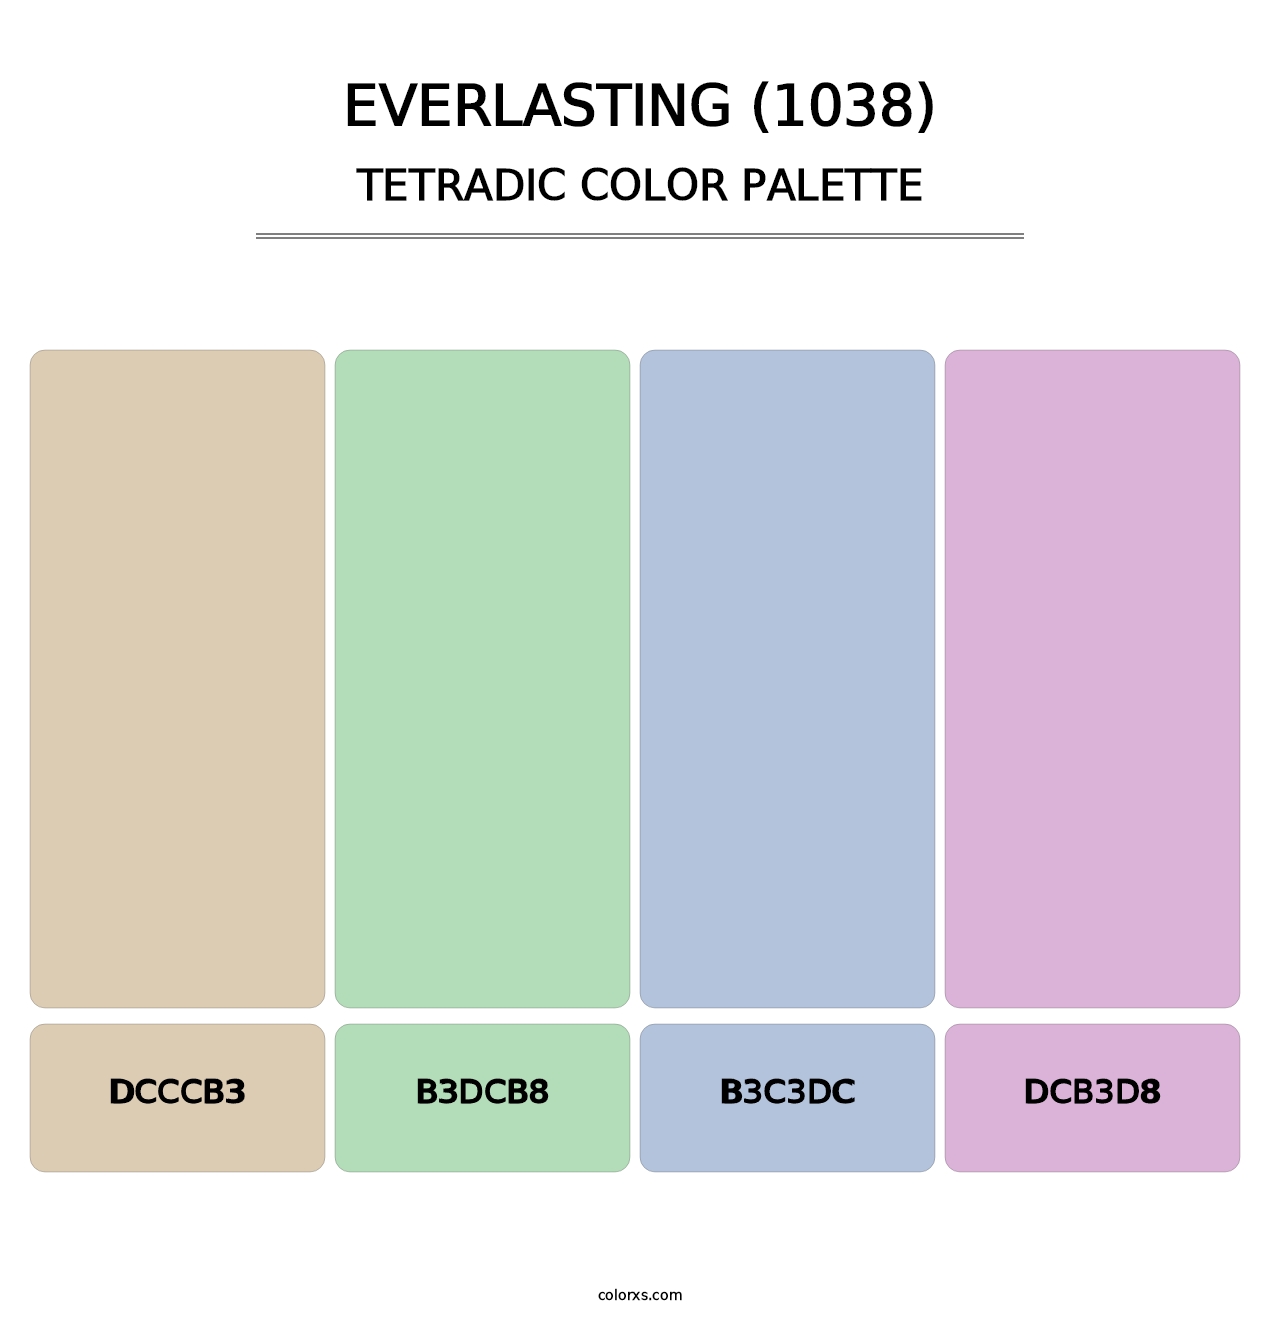 Everlasting (1038) - Tetradic Color Palette